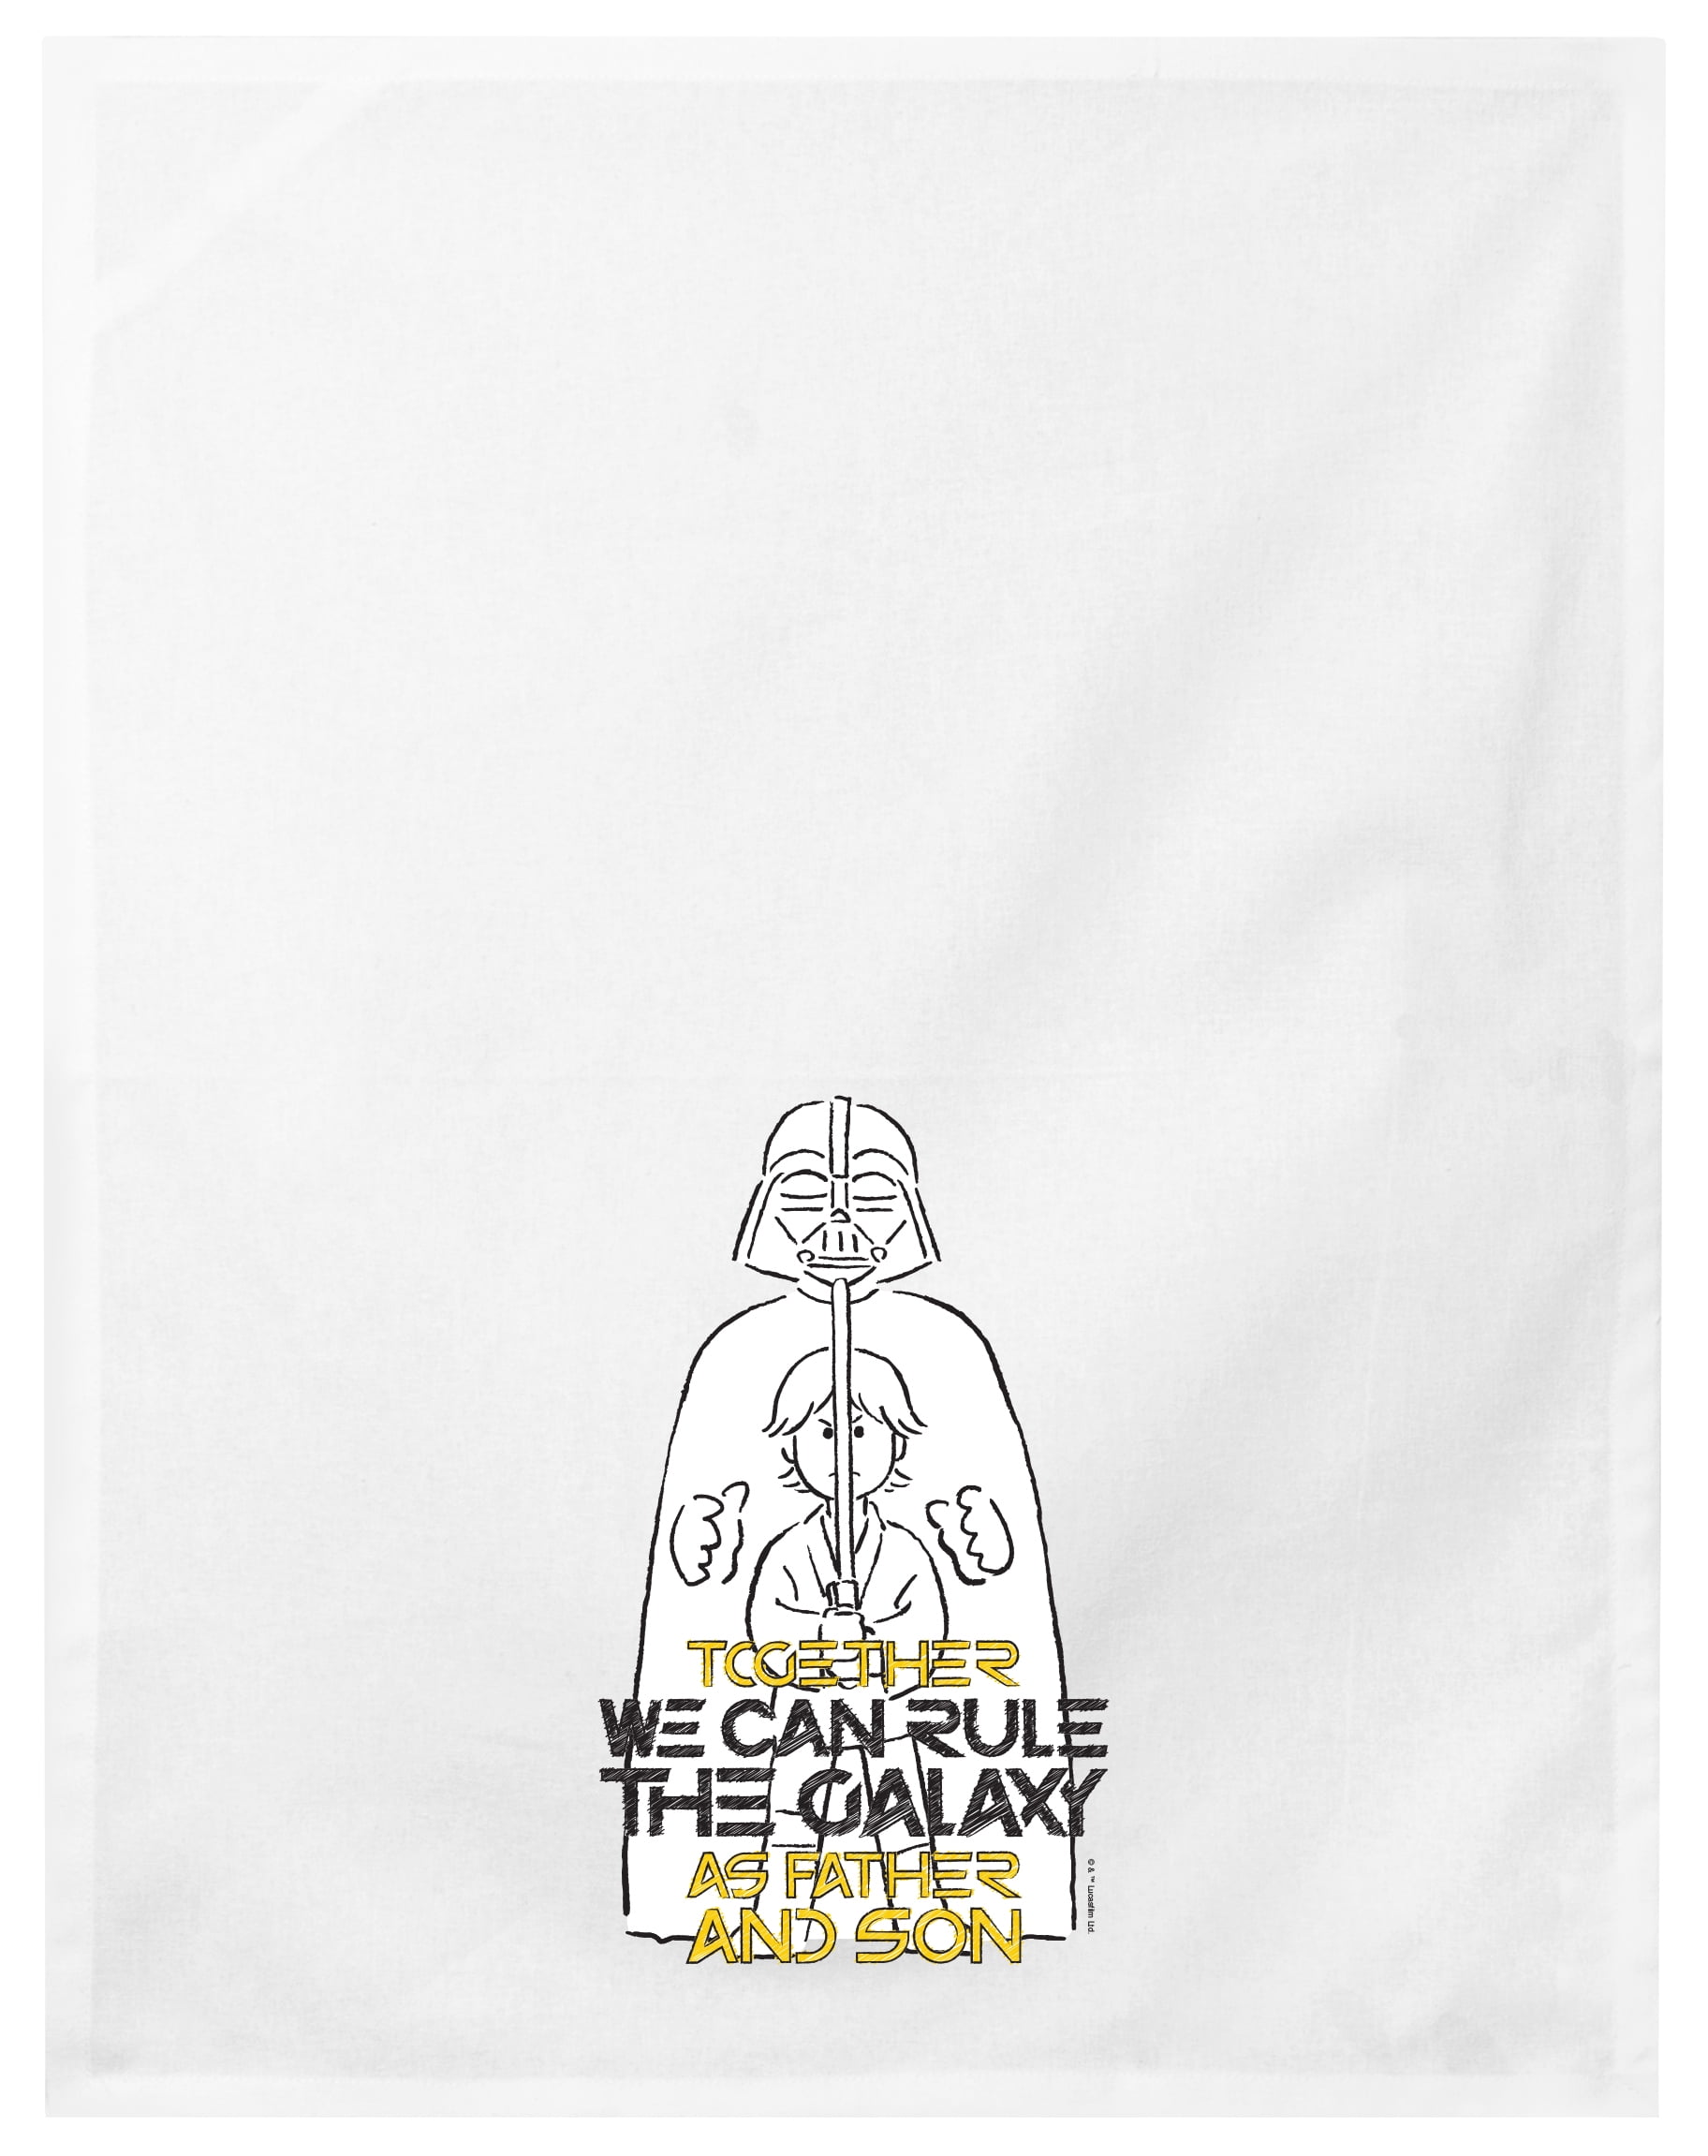 Star Wars Best Dad in the Galaxy Dish Towels